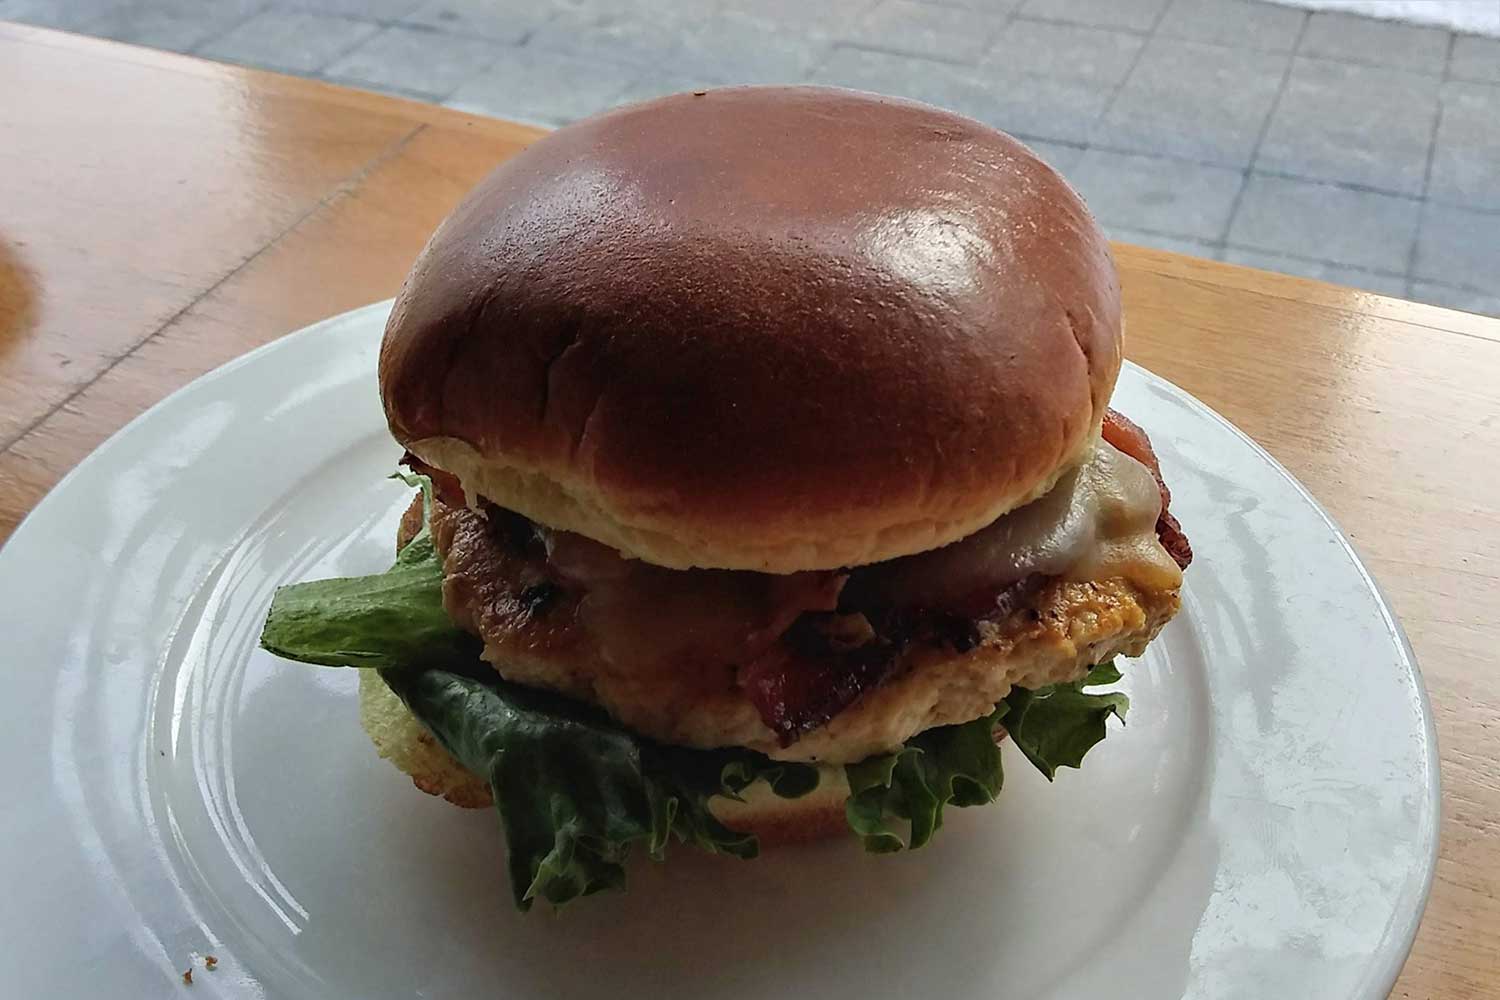 Chicken-substituted standard burger at DLUX